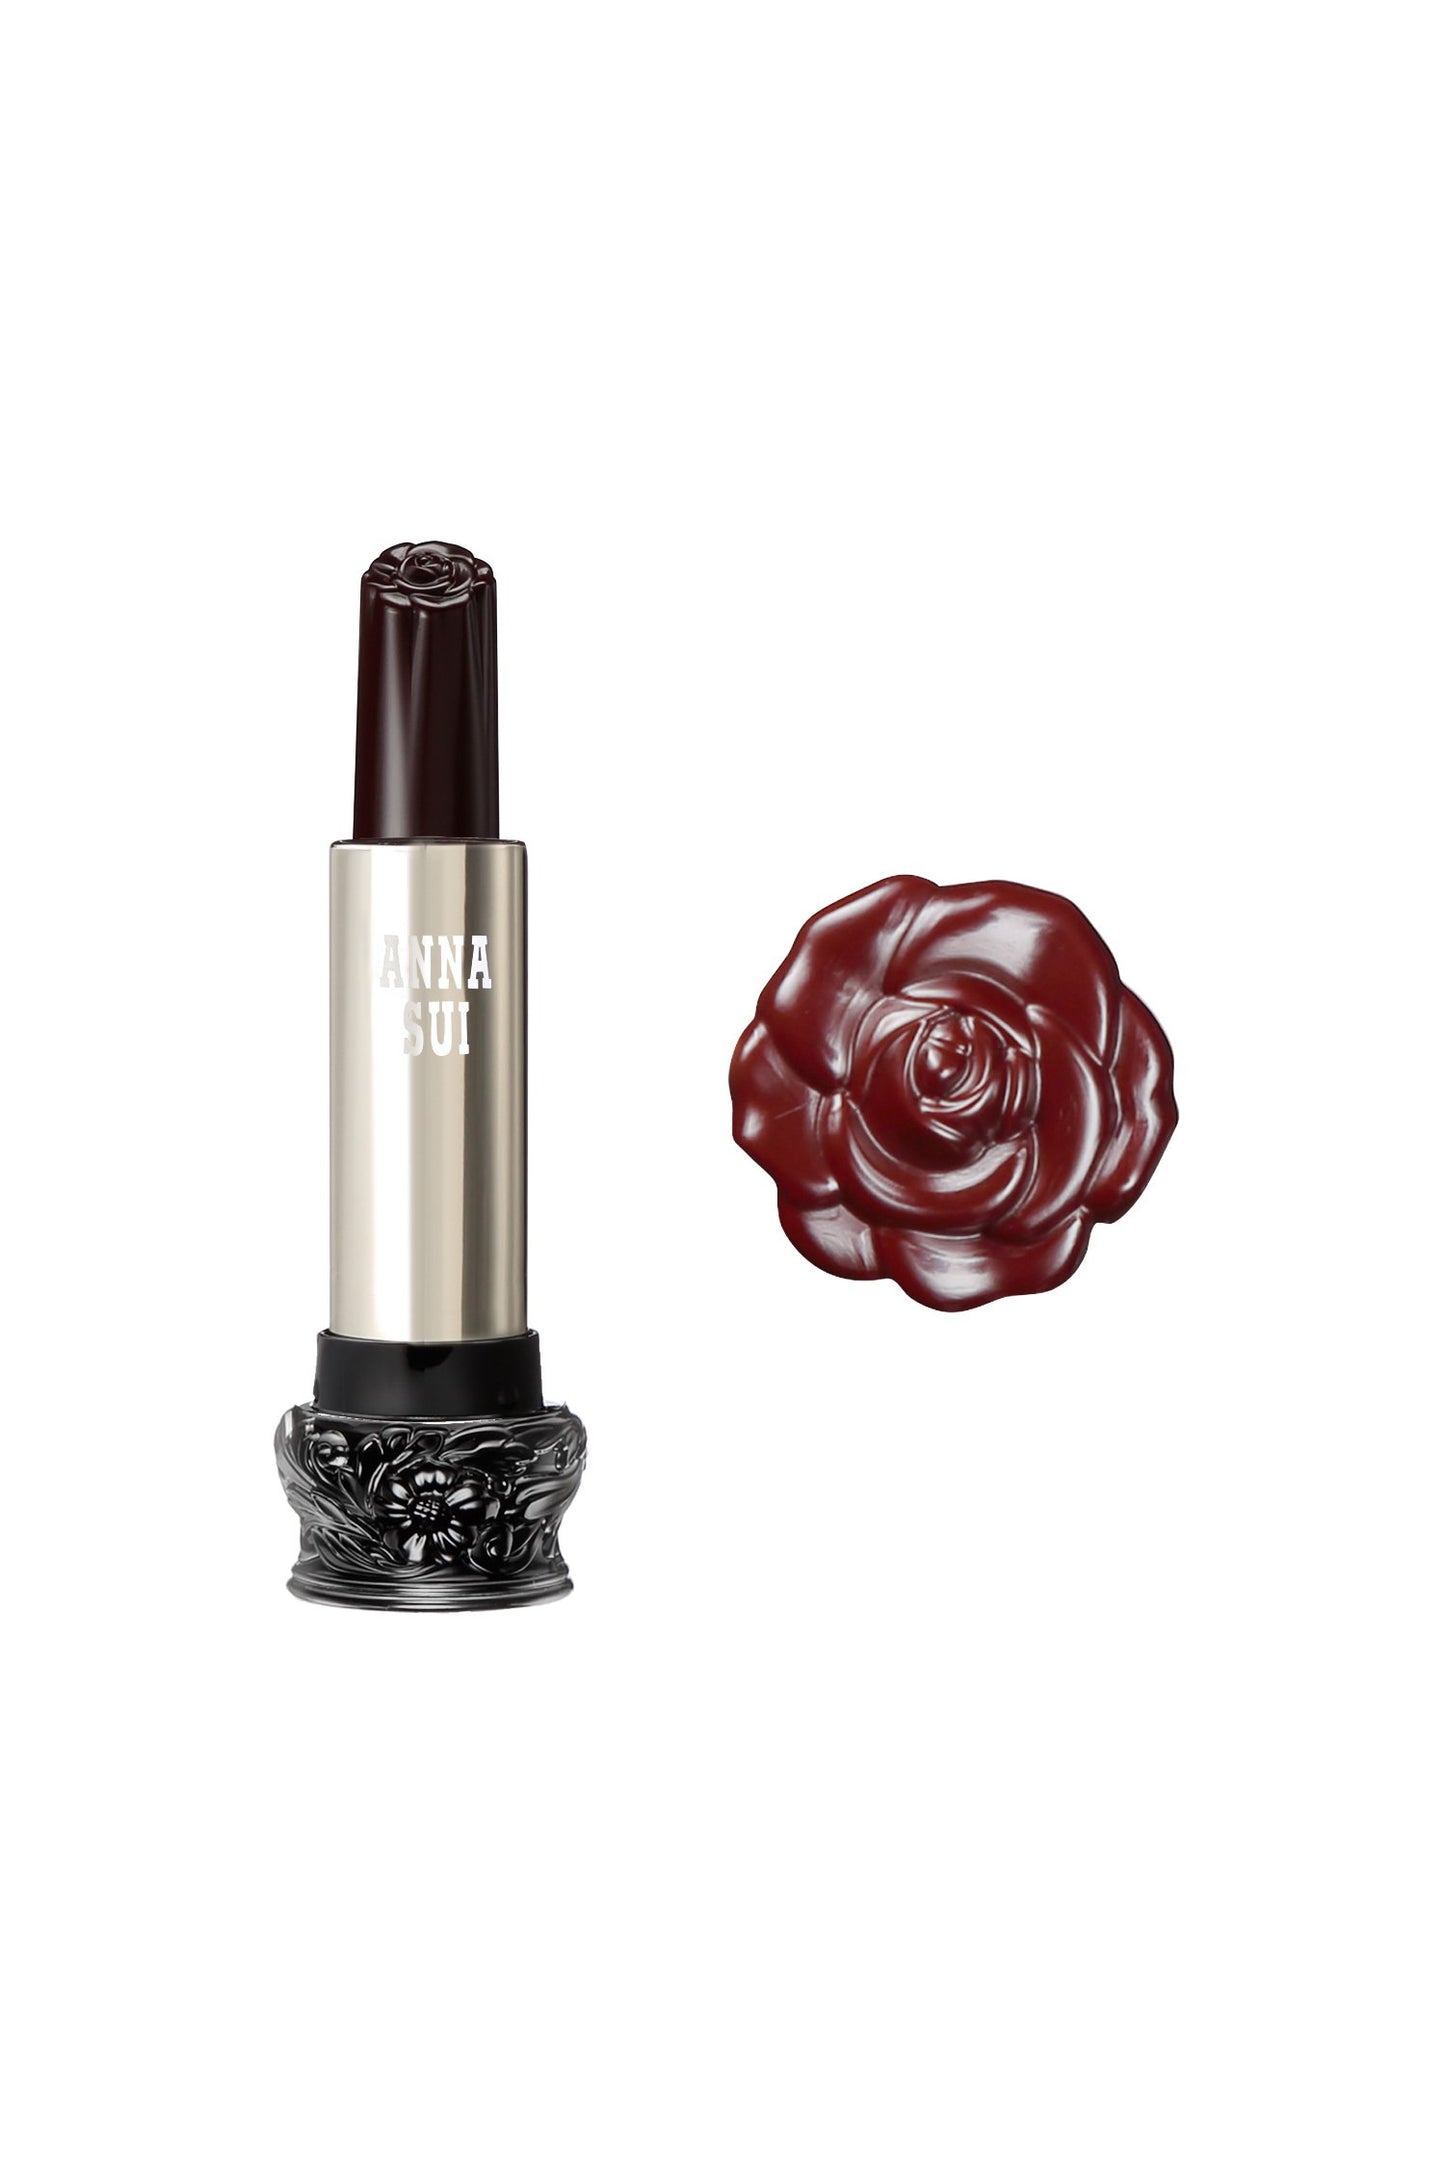 402-Plum Red Dahila Lipstick S: Sheer Flower, cylindrical, large black base, engraved floral design, metallic body 